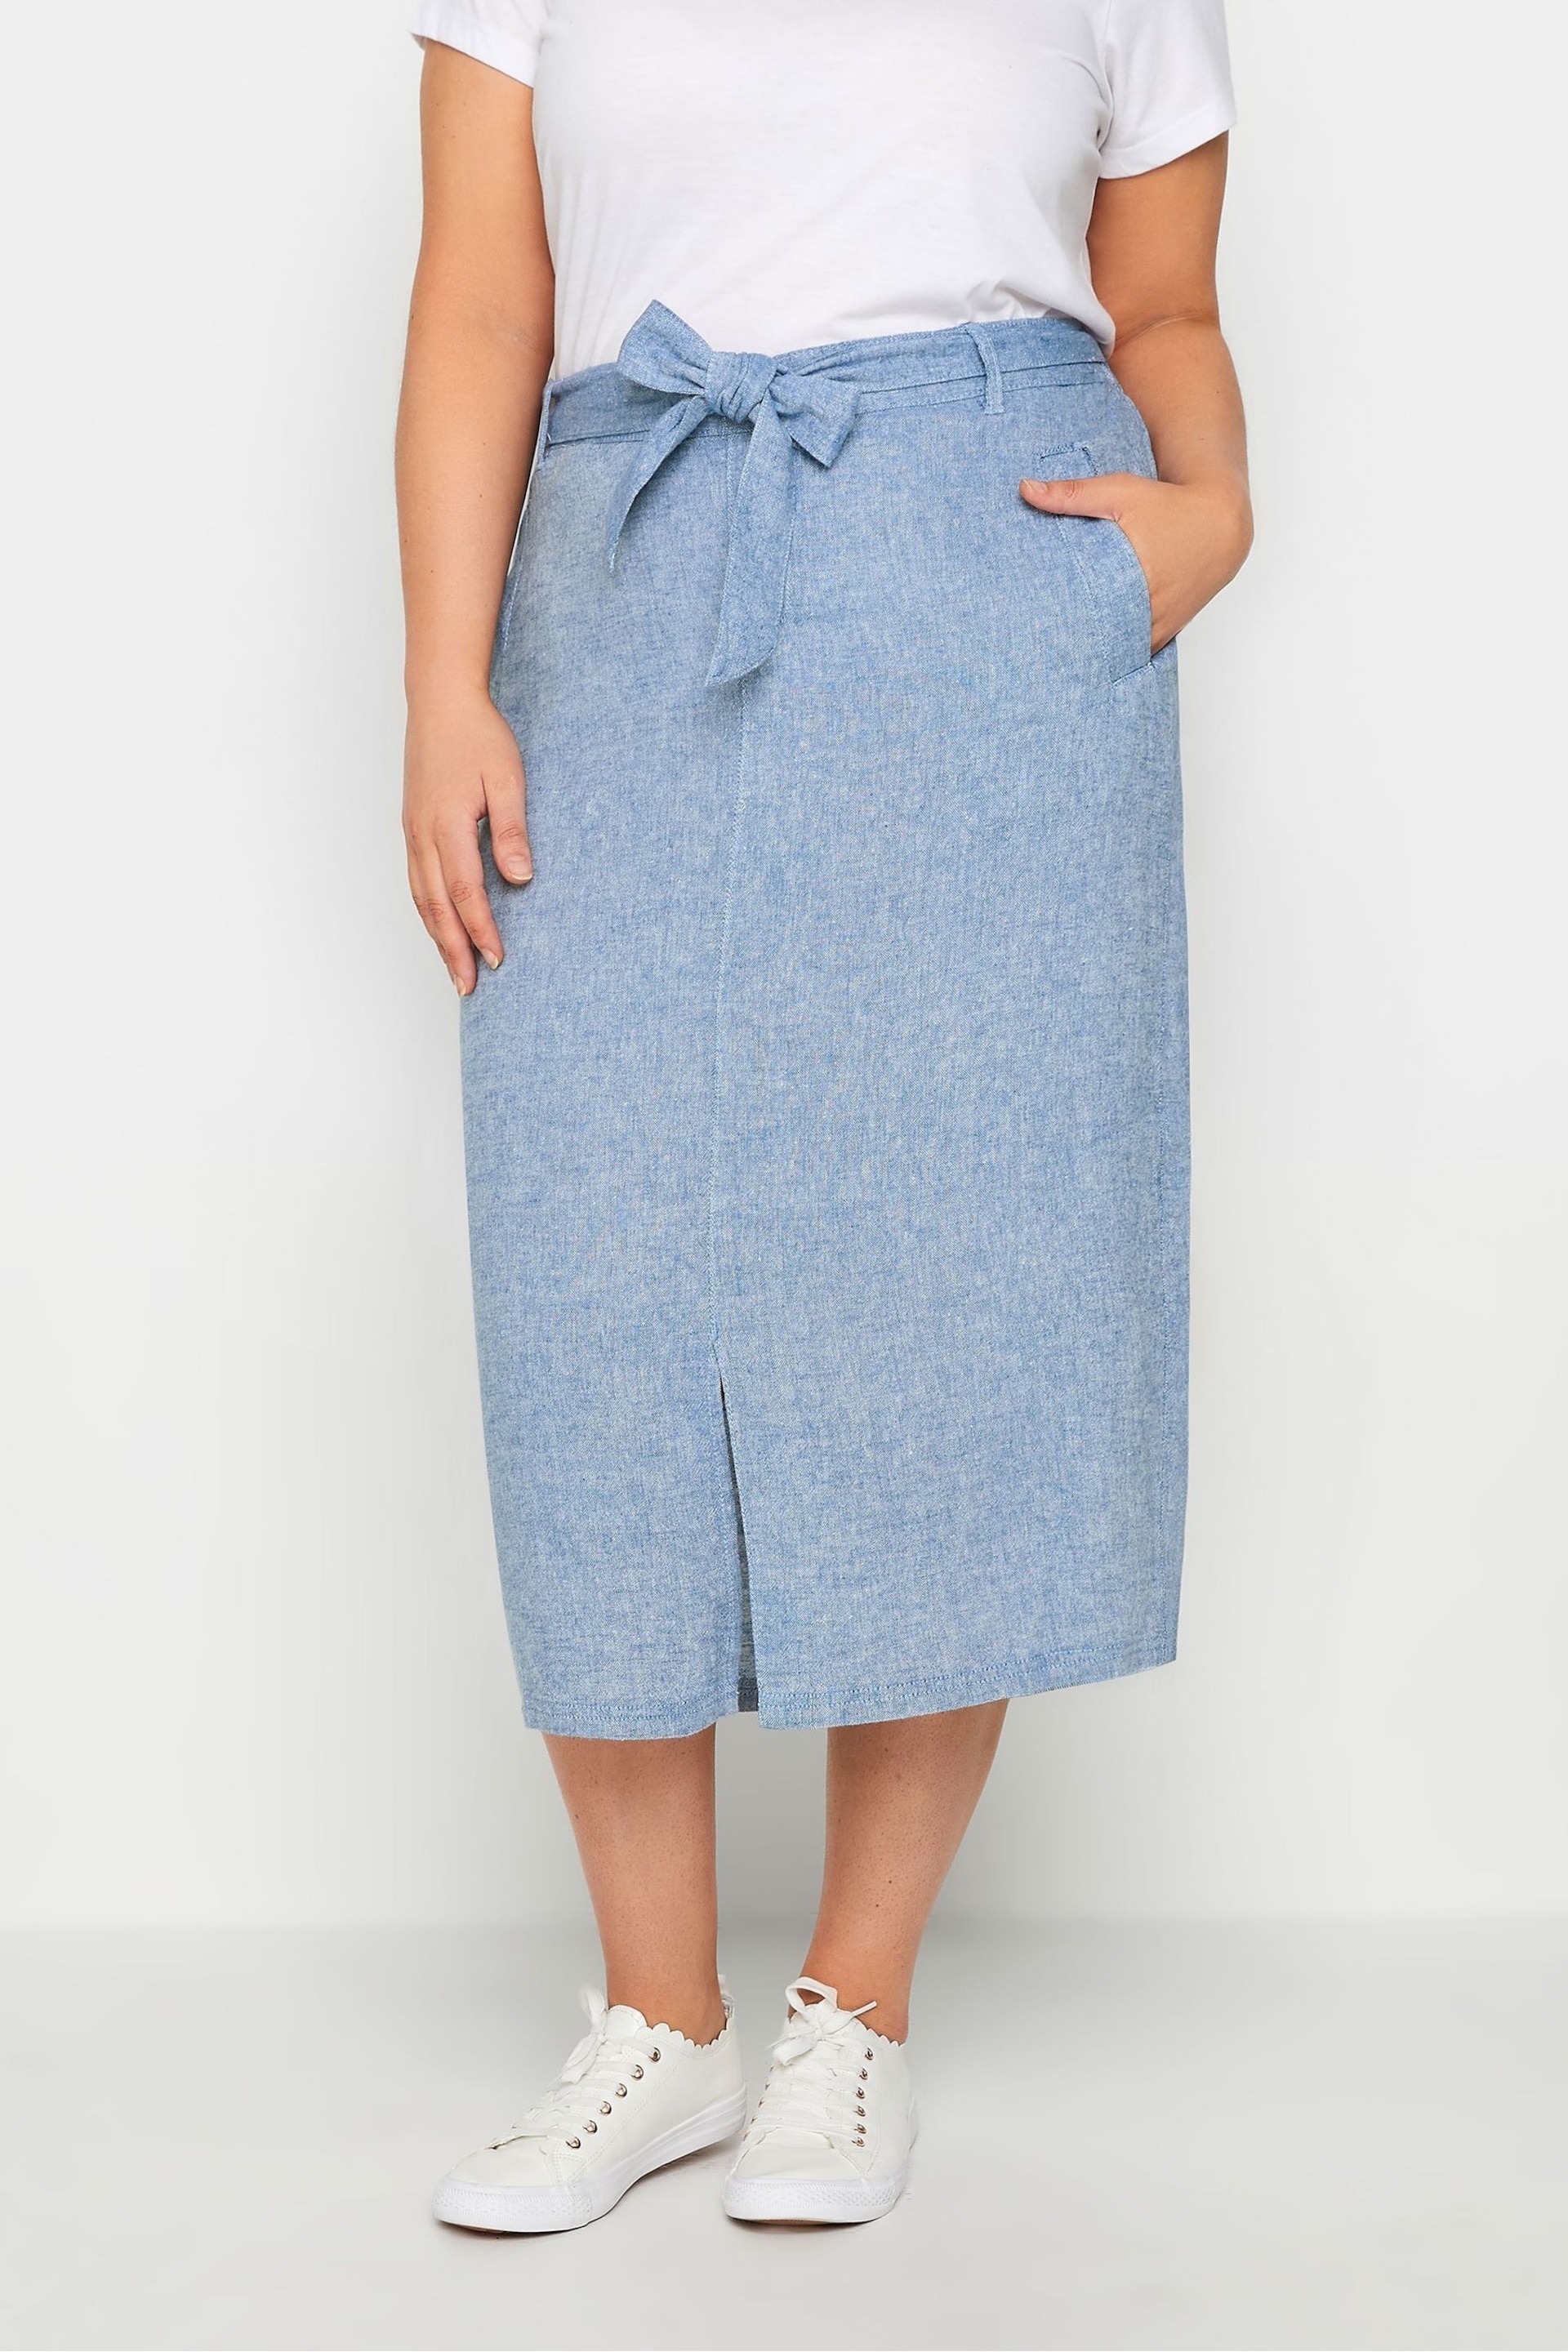 Evans Blue Light Tie Waist Midi Skirt - Image 1 of 2